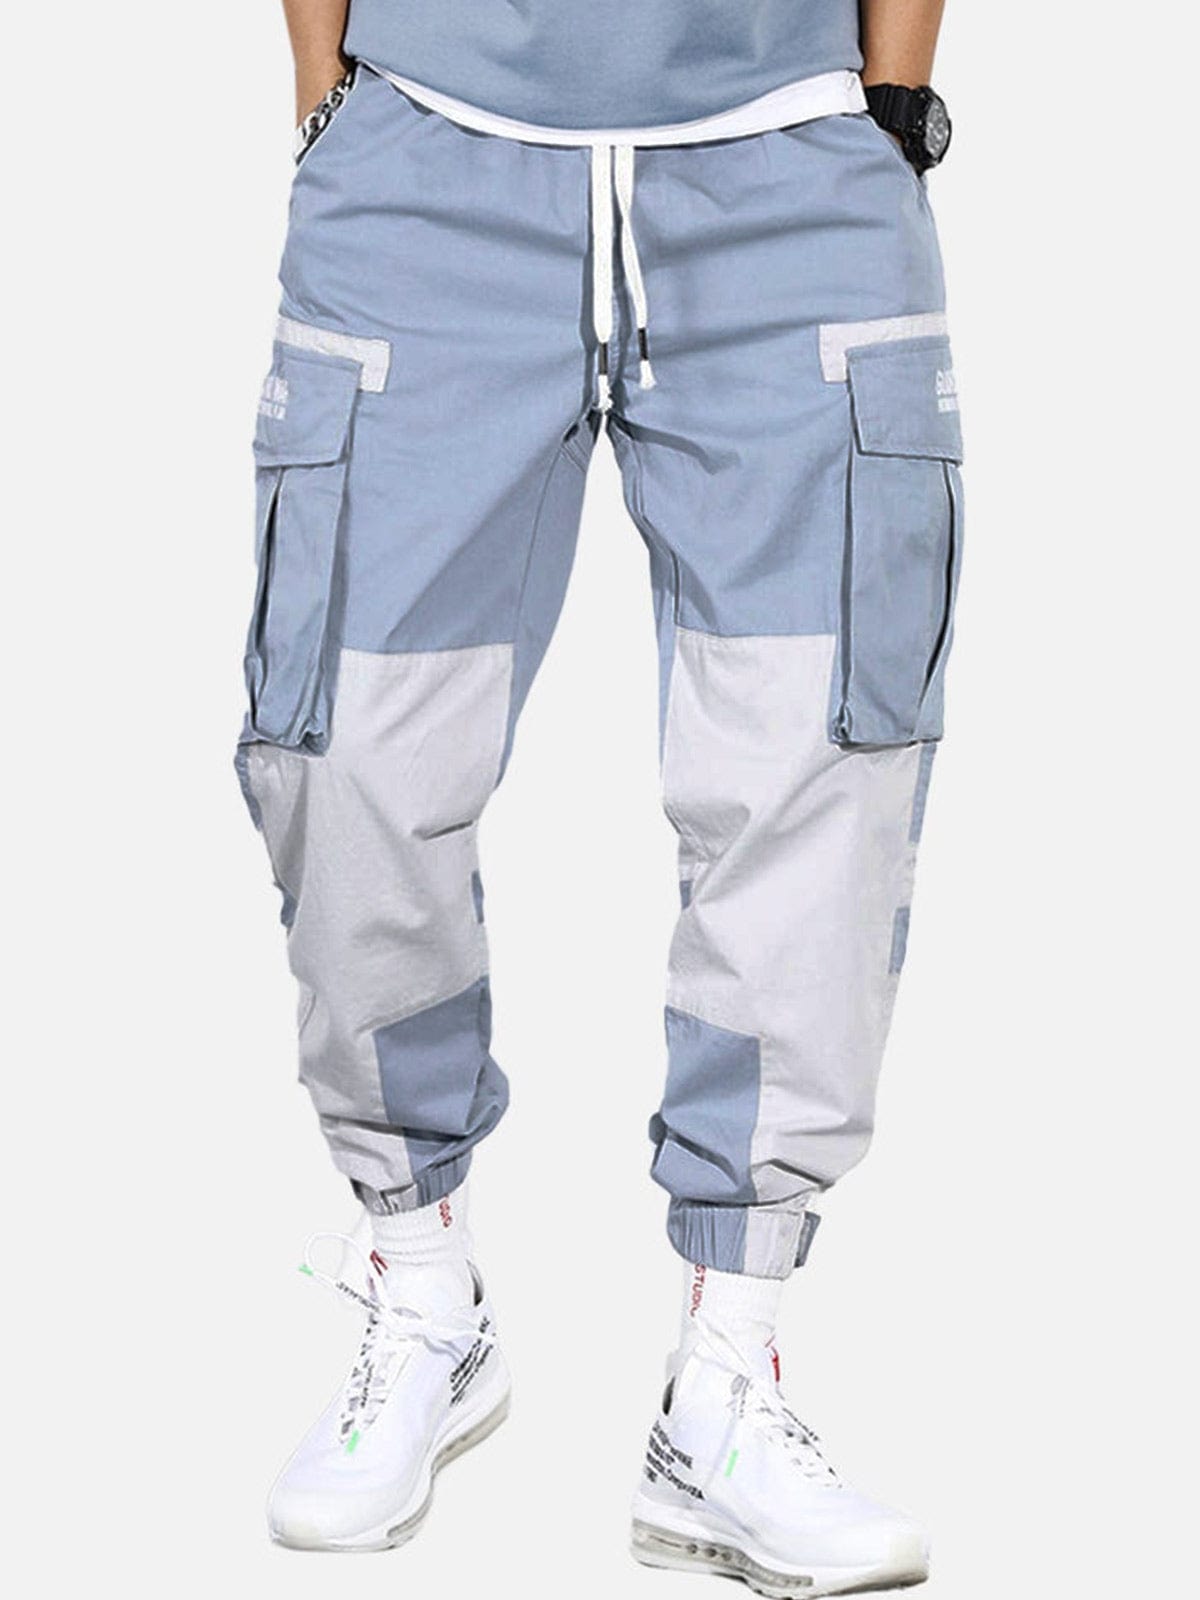 Versatile Cargo Pants with Spacious Pockets